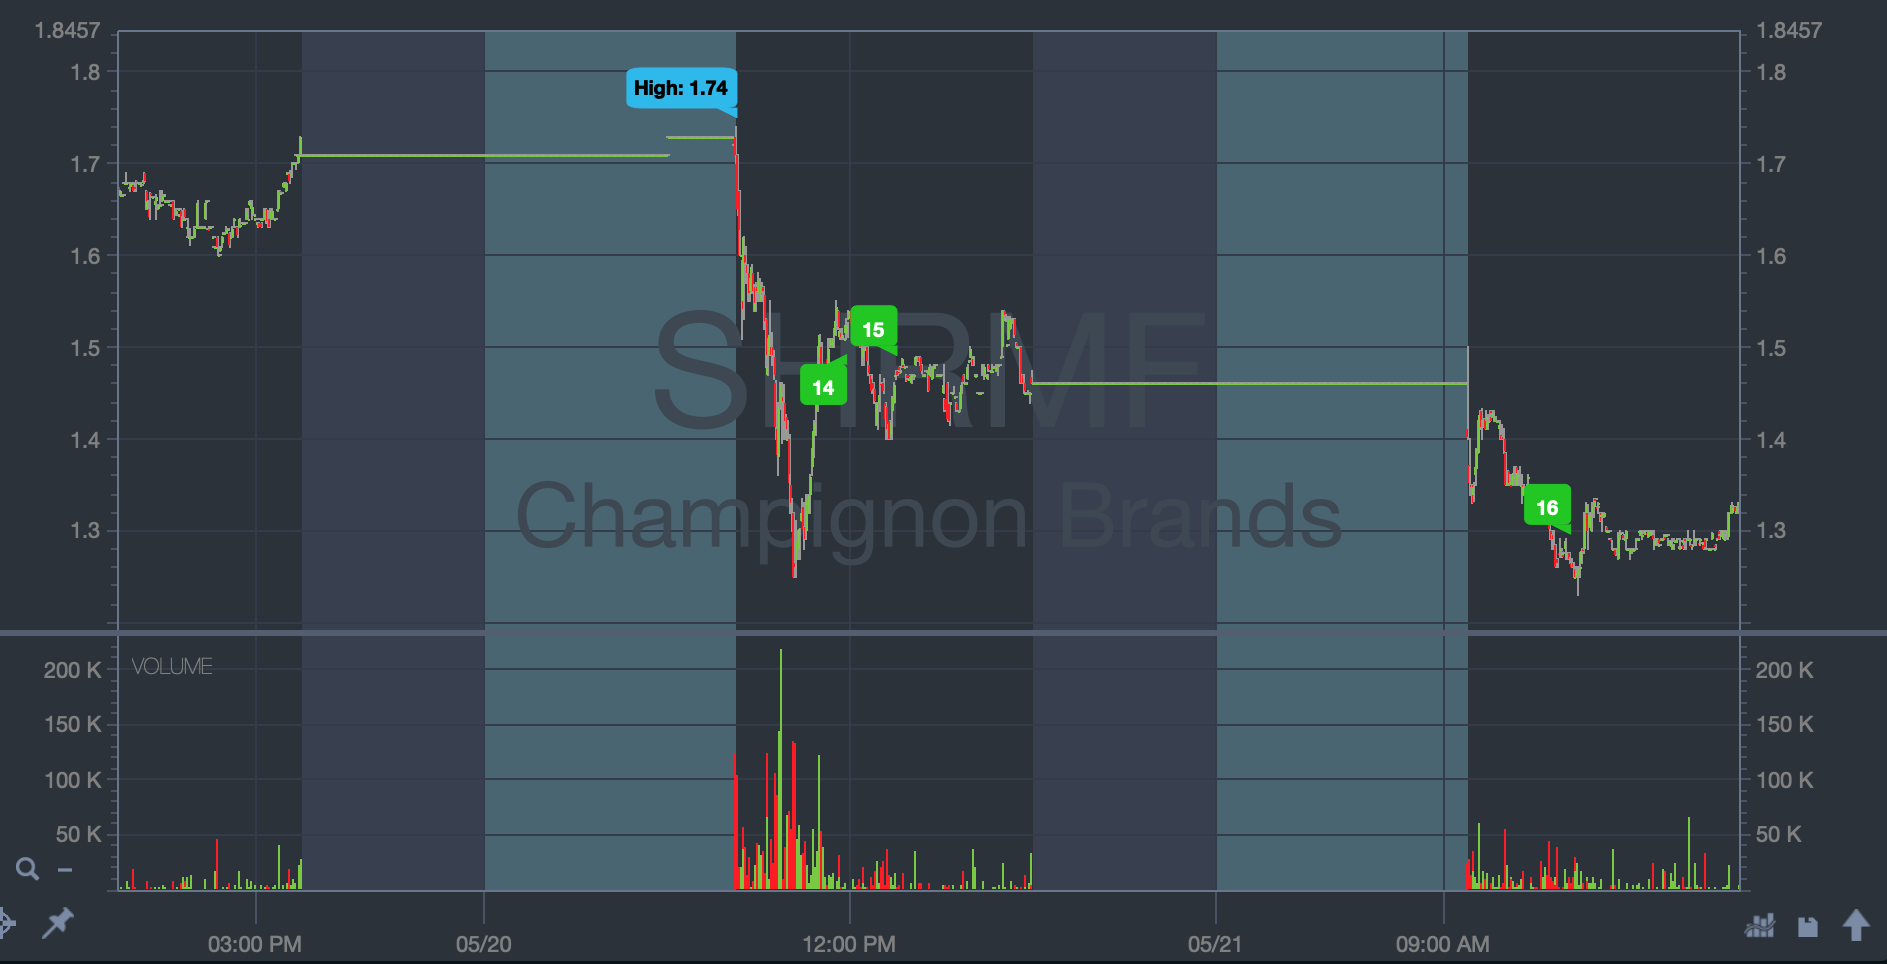 SHRMF stock chart